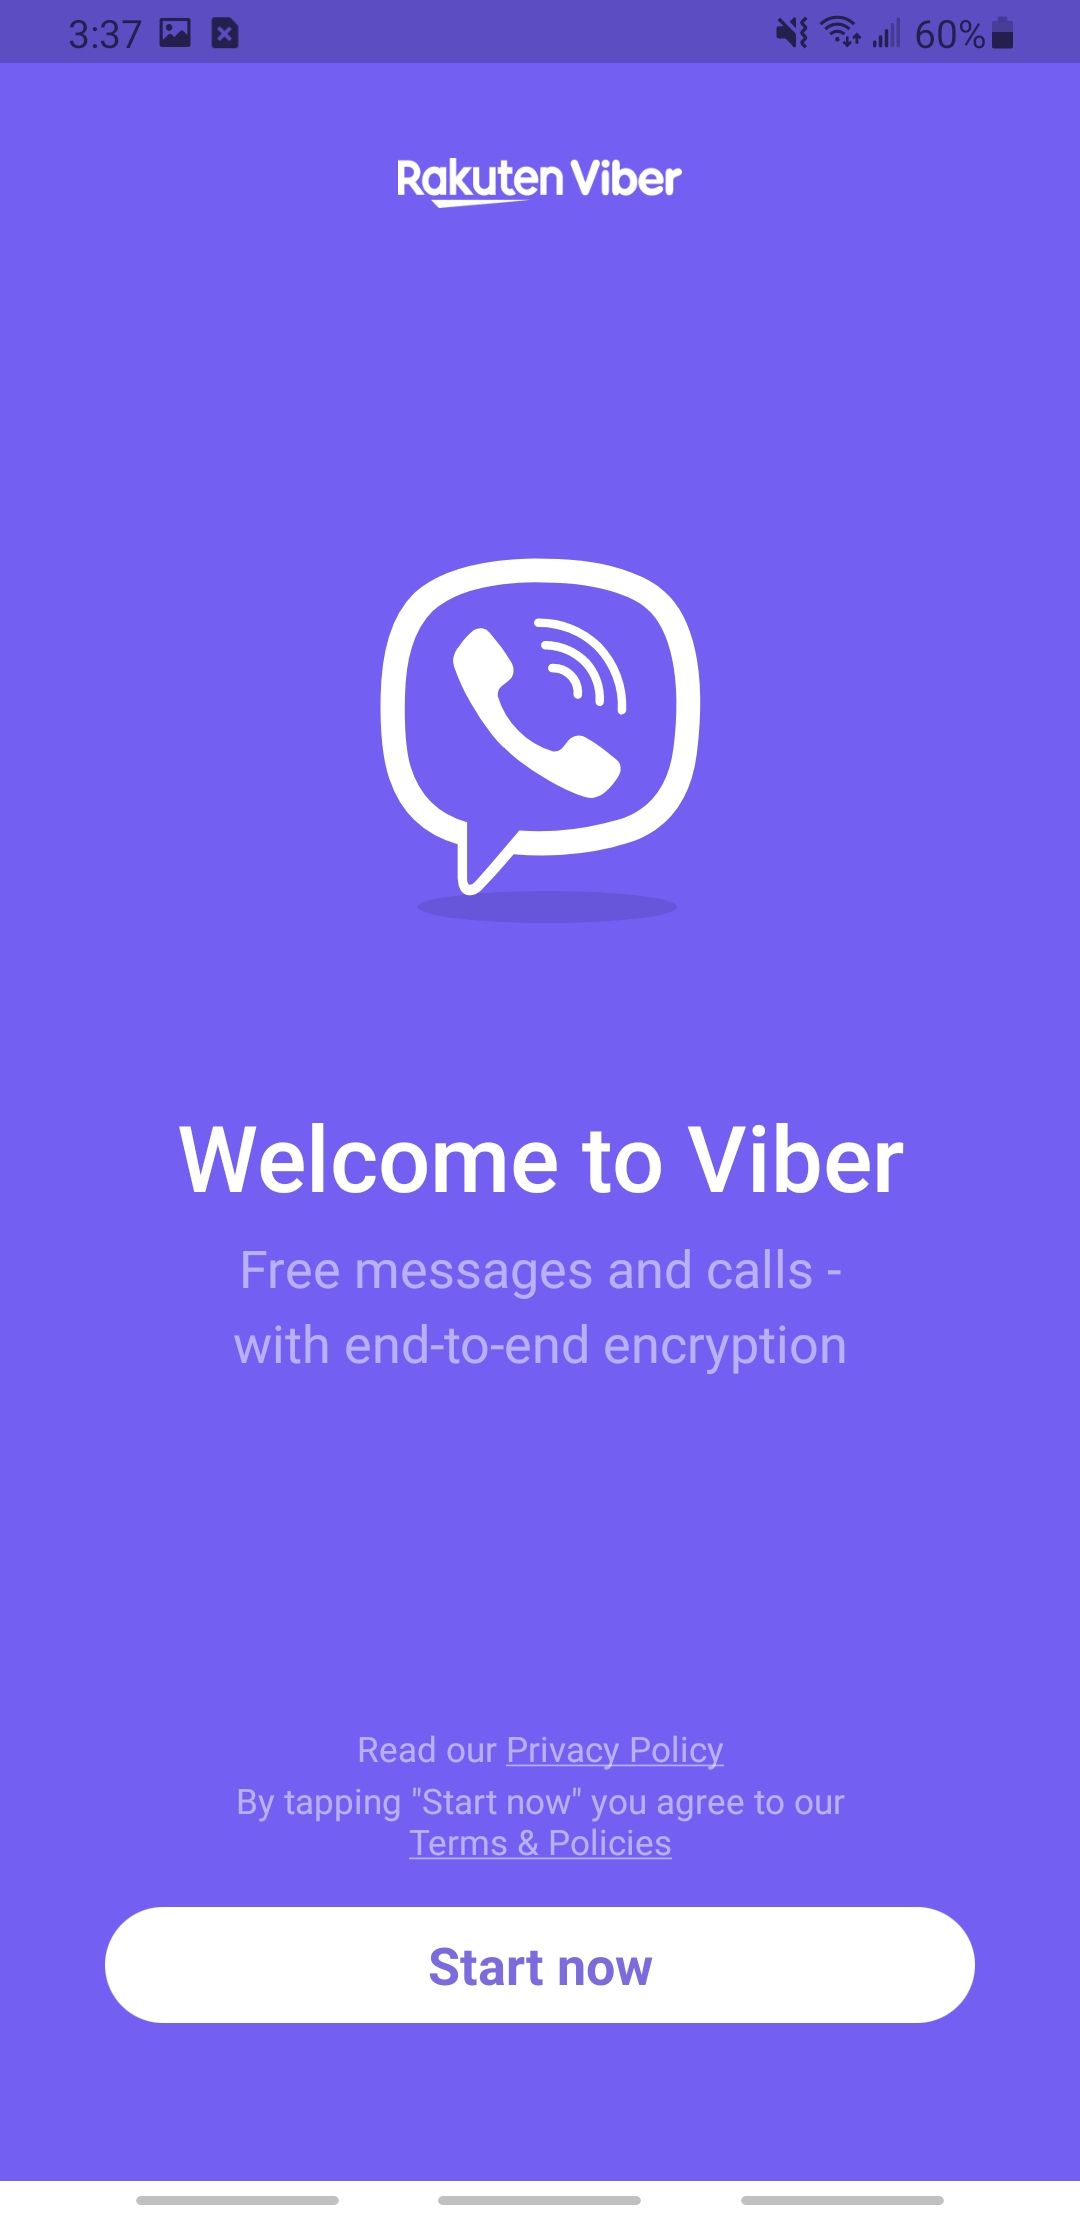 viber app welcome screen